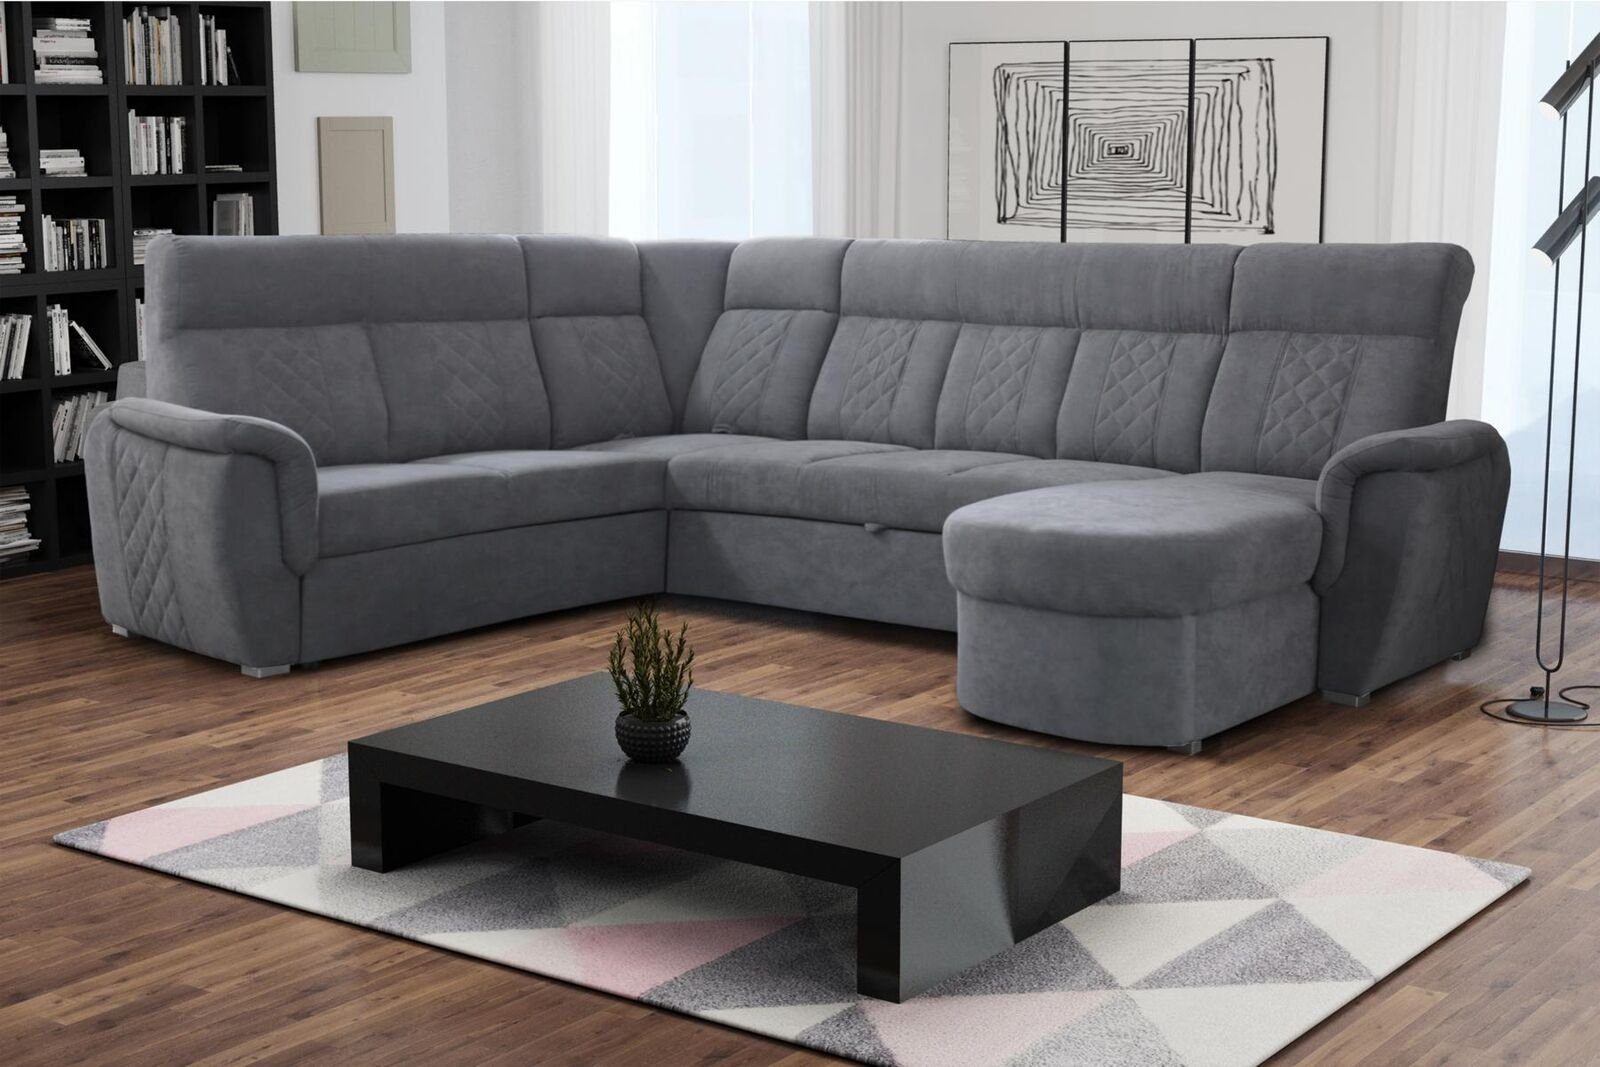 JVmoebel Ecksofa, Wohnlandschaft Luxus Polster Modern Relax Sofa Couch Ecksofa U-form Grau